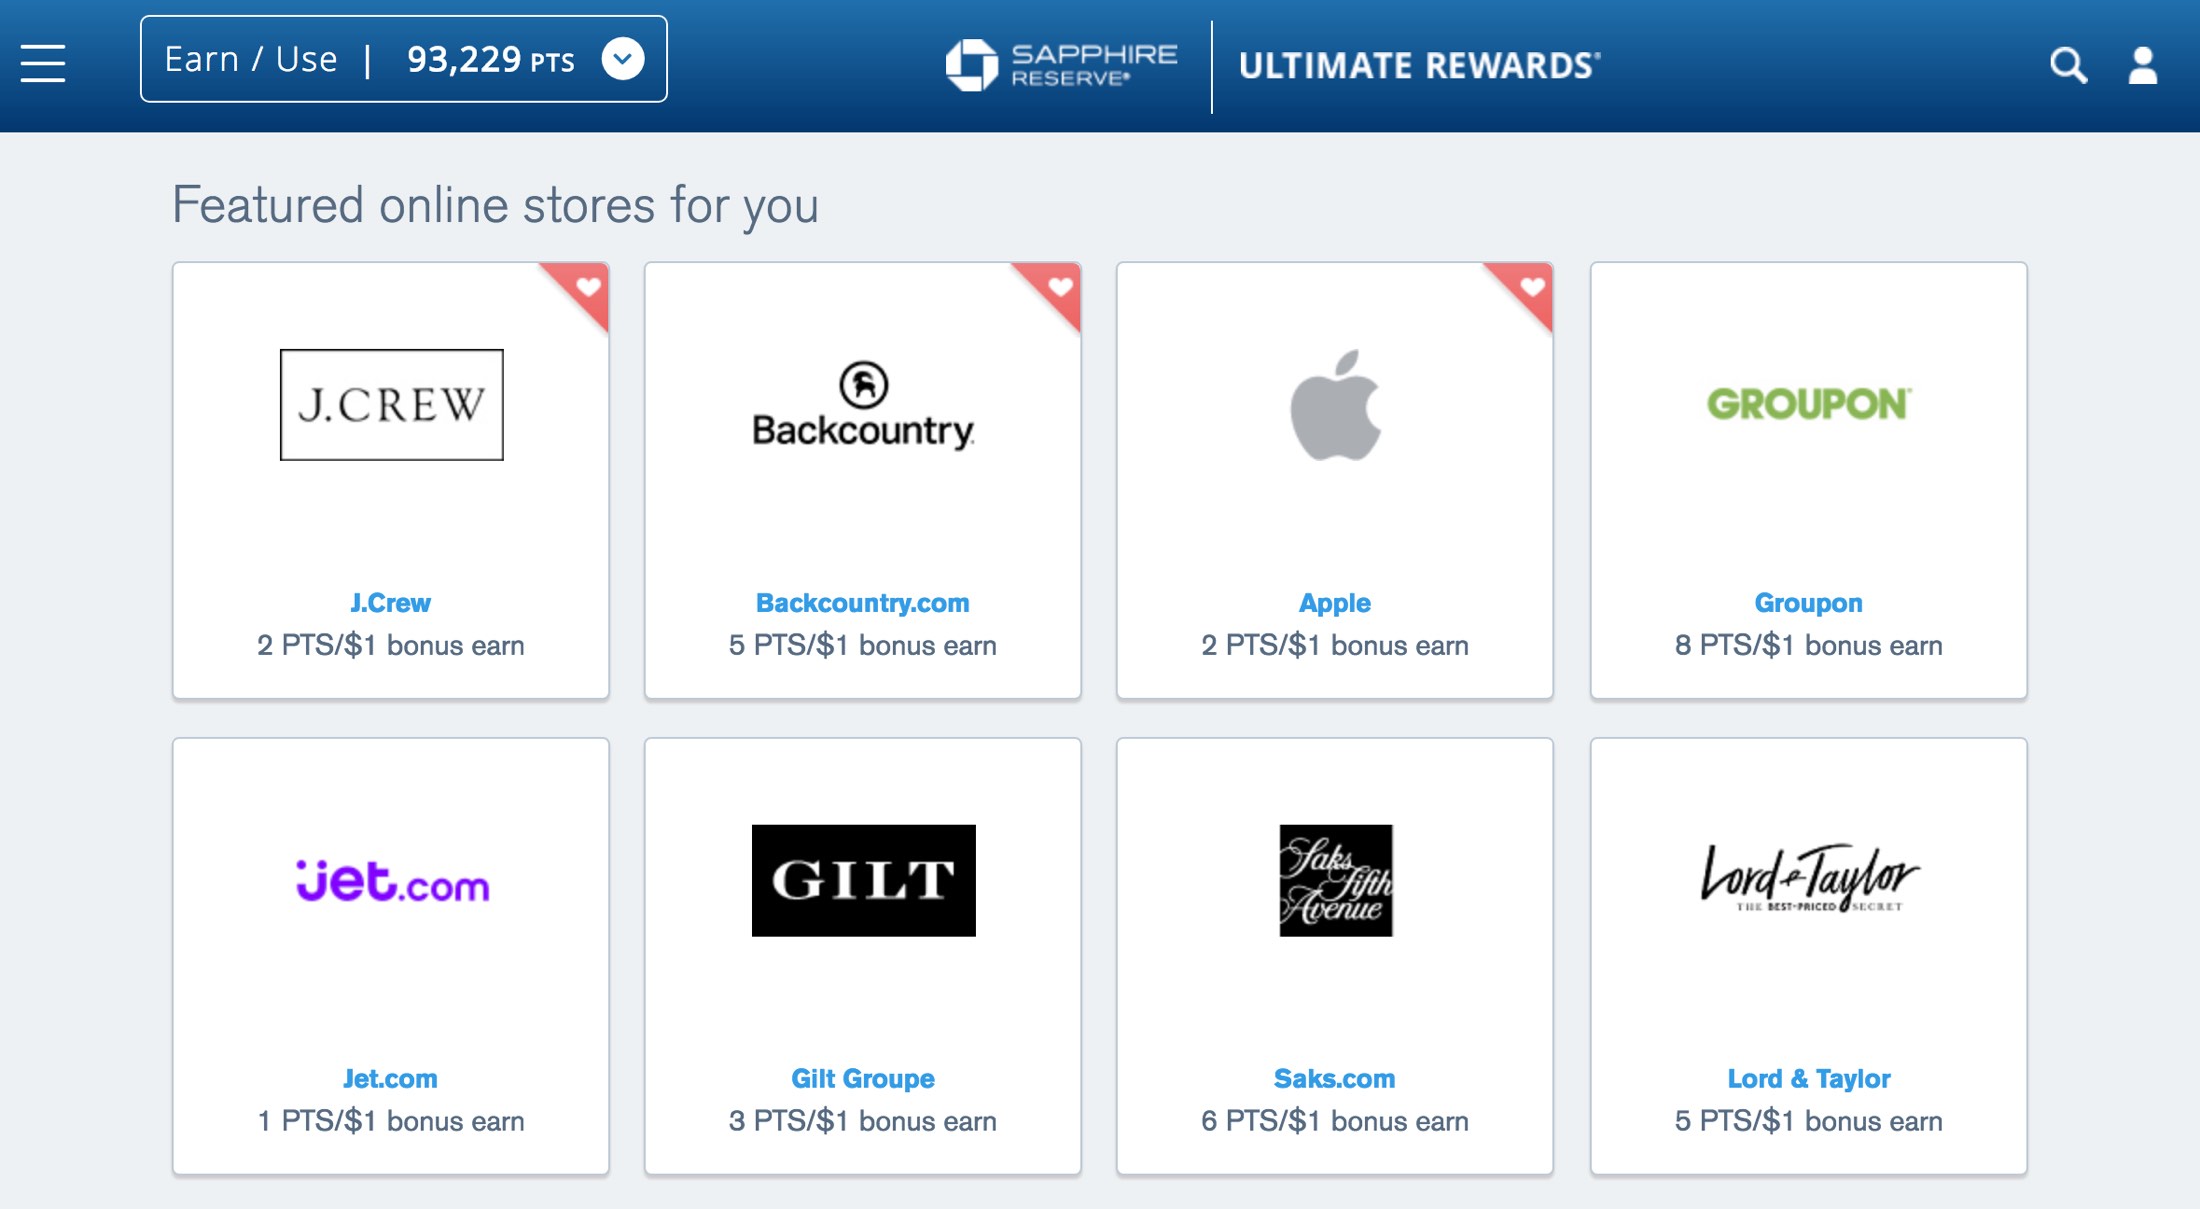 Chase Ultimate Rewards shopping portal